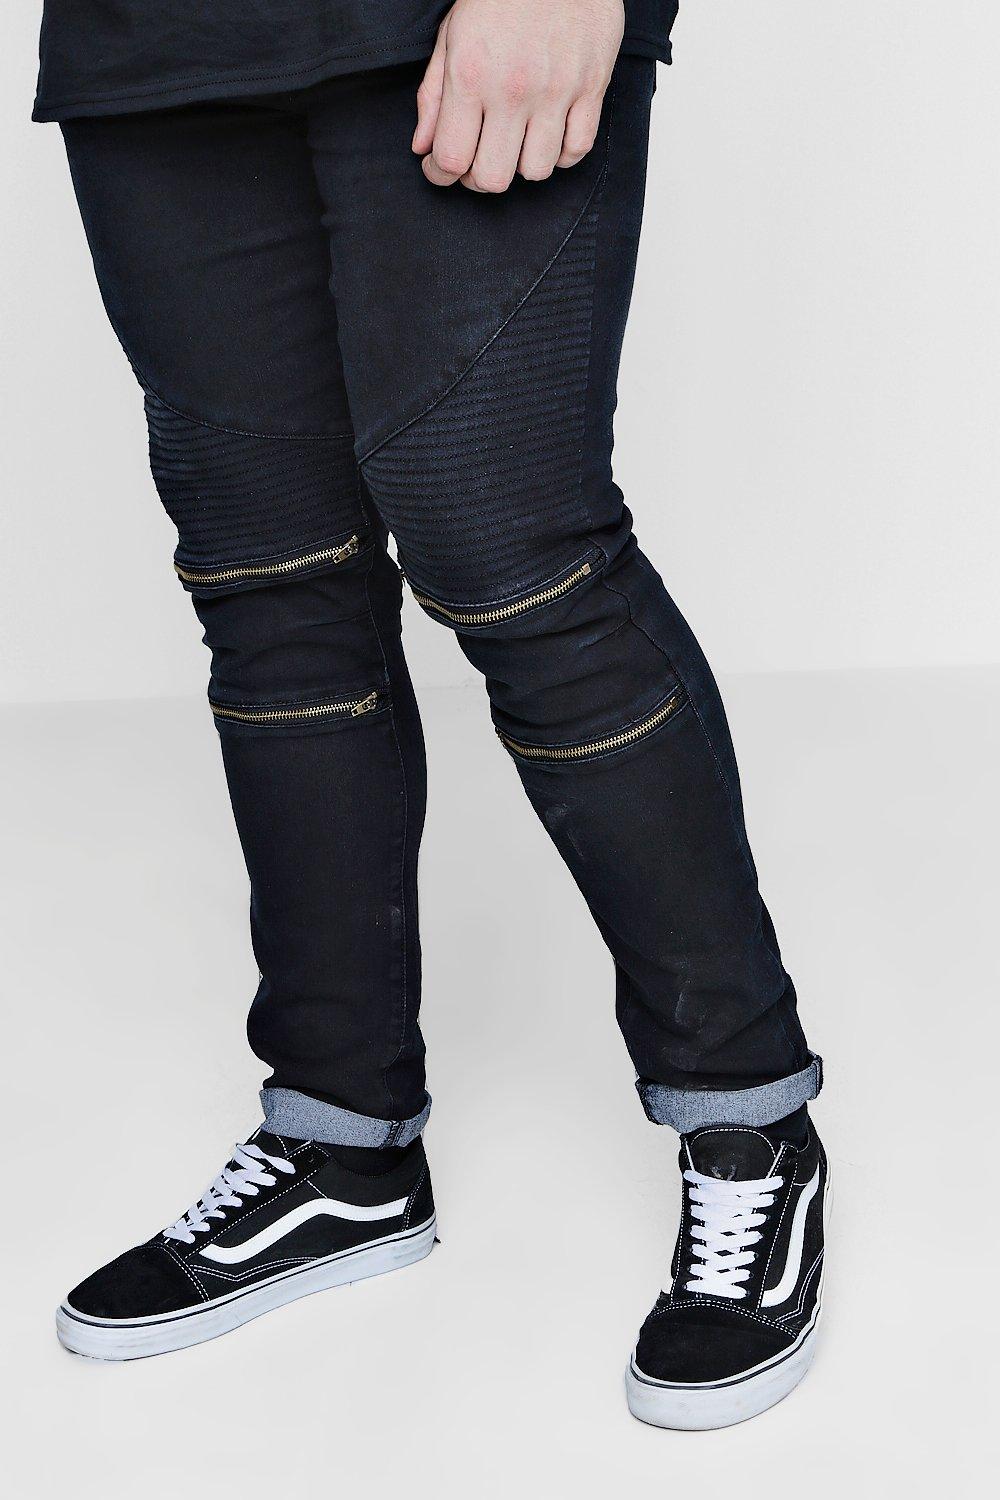 Black Knee Zipper pant